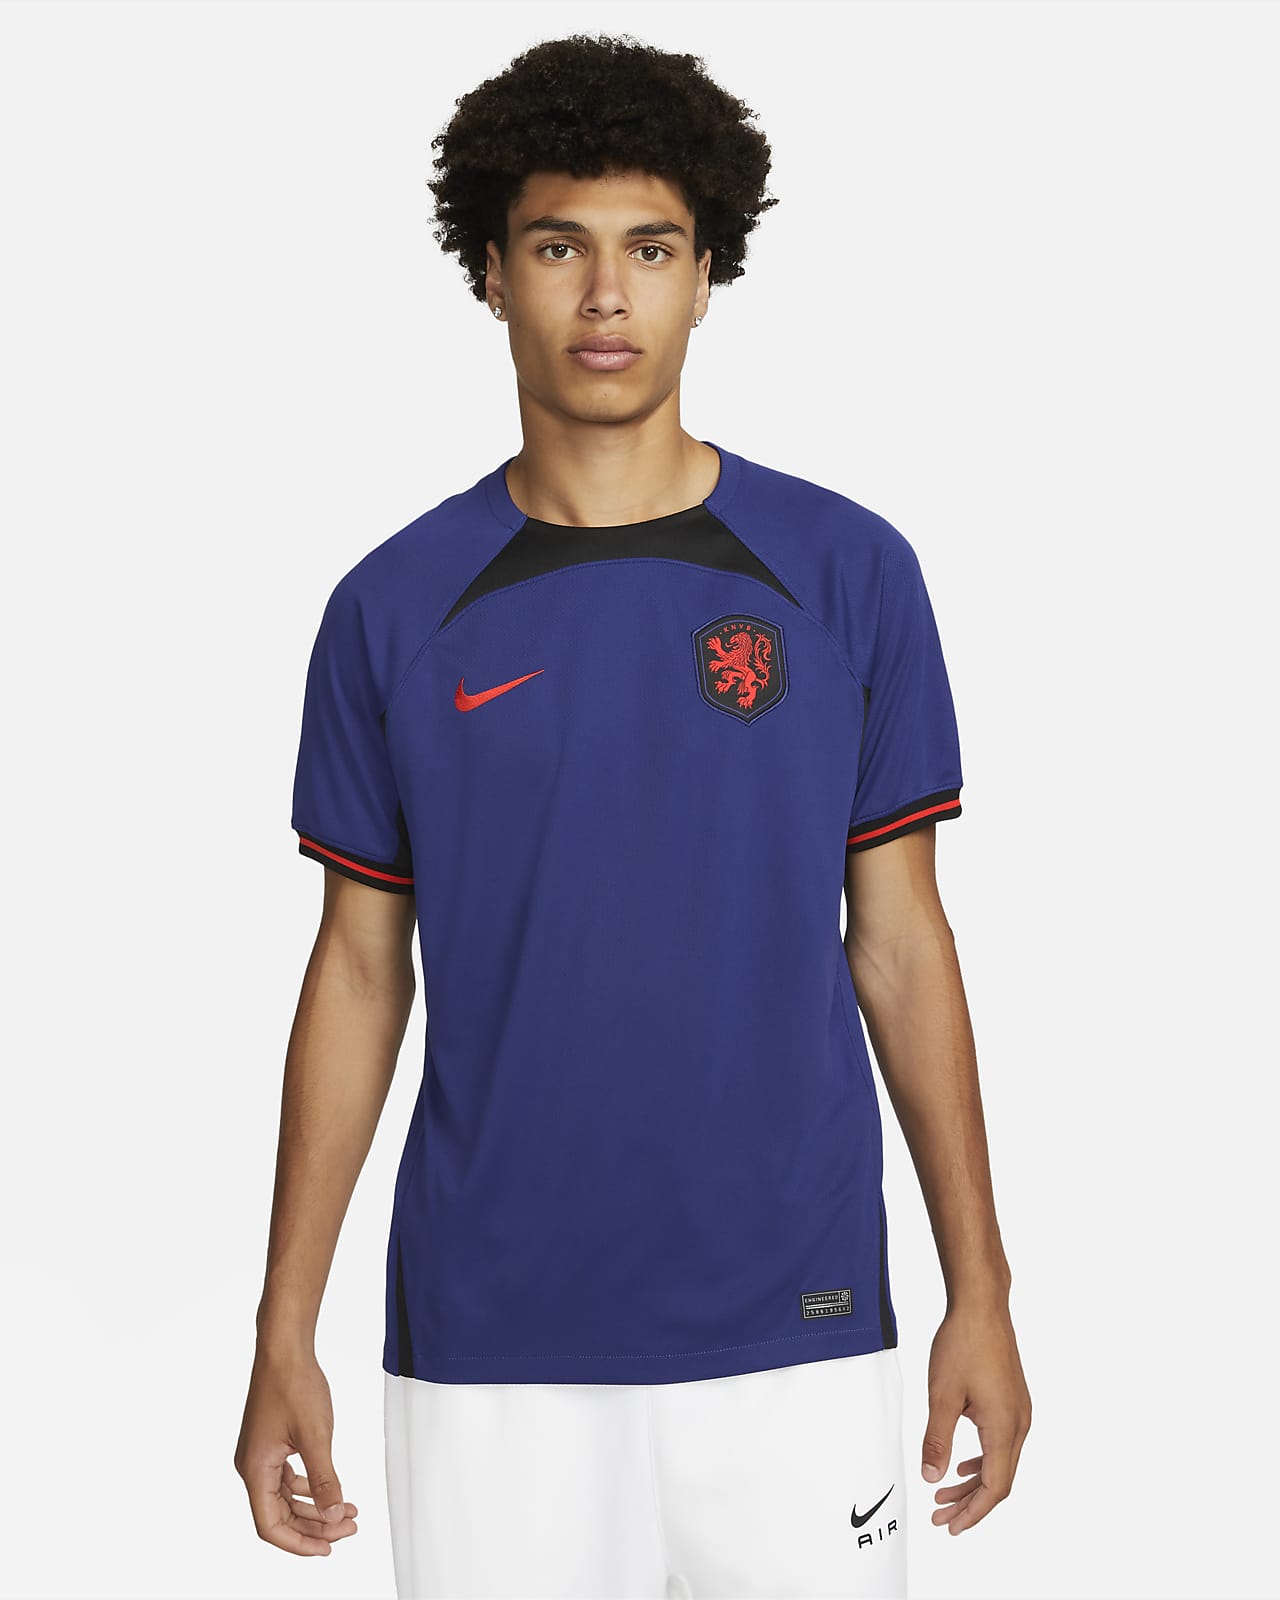 Netherlands Men's Nike T-Shirt. Nike LU